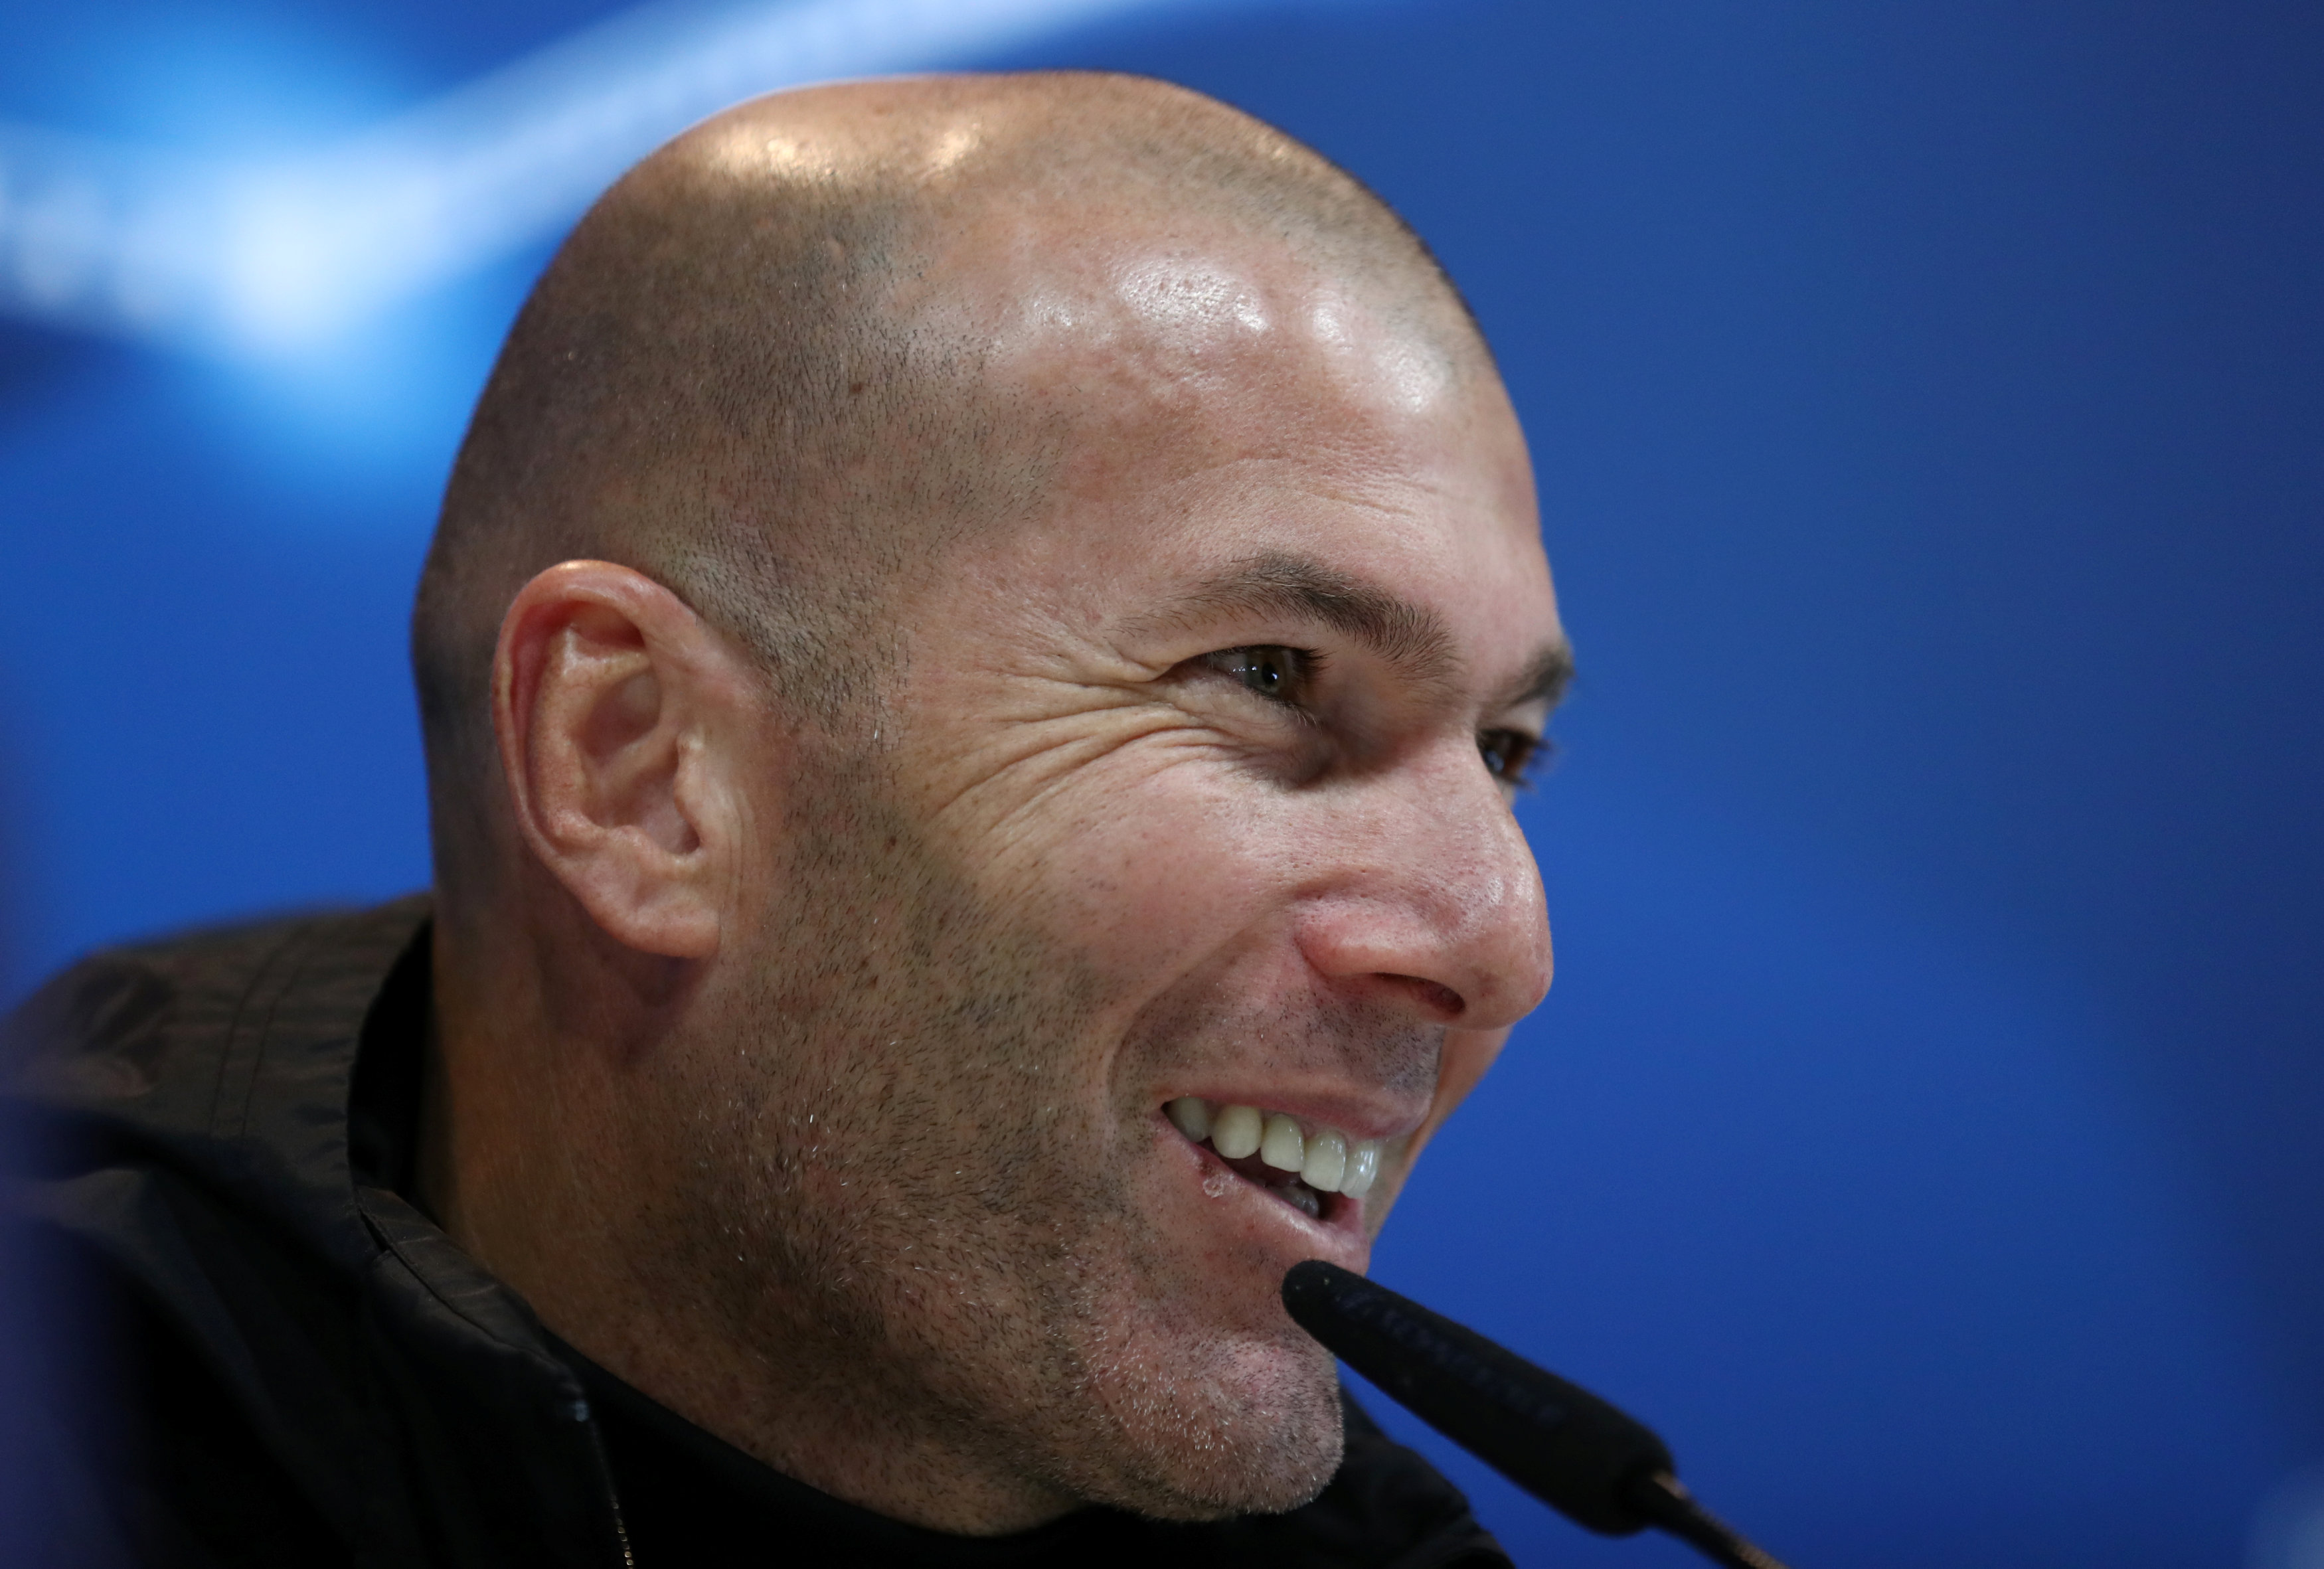 Ronaldo deserves more respect, says Zidane